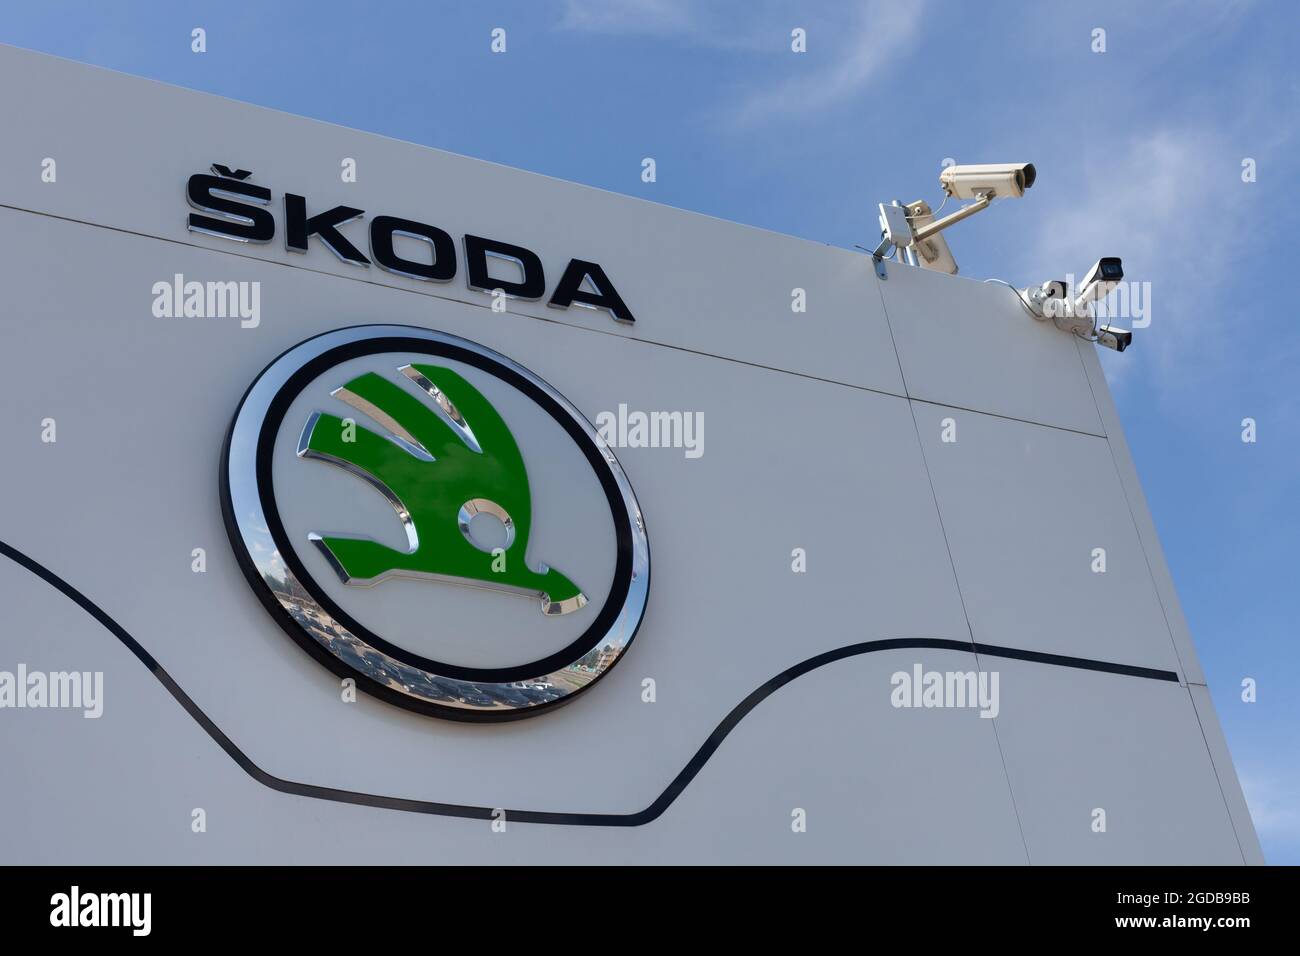 Poznan, POLAND - Jul 30, 2021: Skoda dealership sign. Closeup of skoda logo on whiteboard Stock Photo